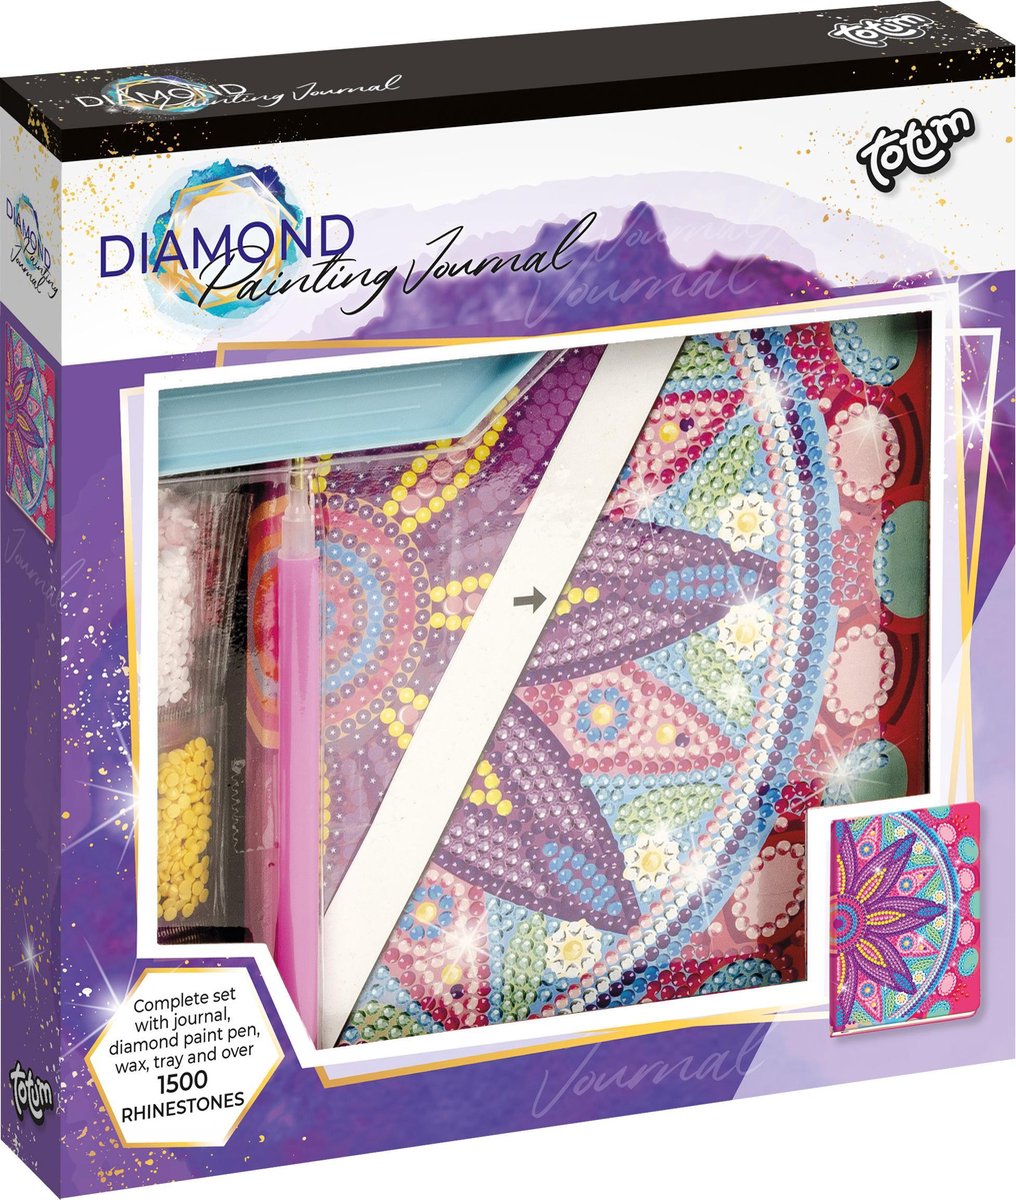 Totum Diamond Painting Notitieboek creatief dagboek knutselset flower bloem mandala dessin cadeautip hobby creatief